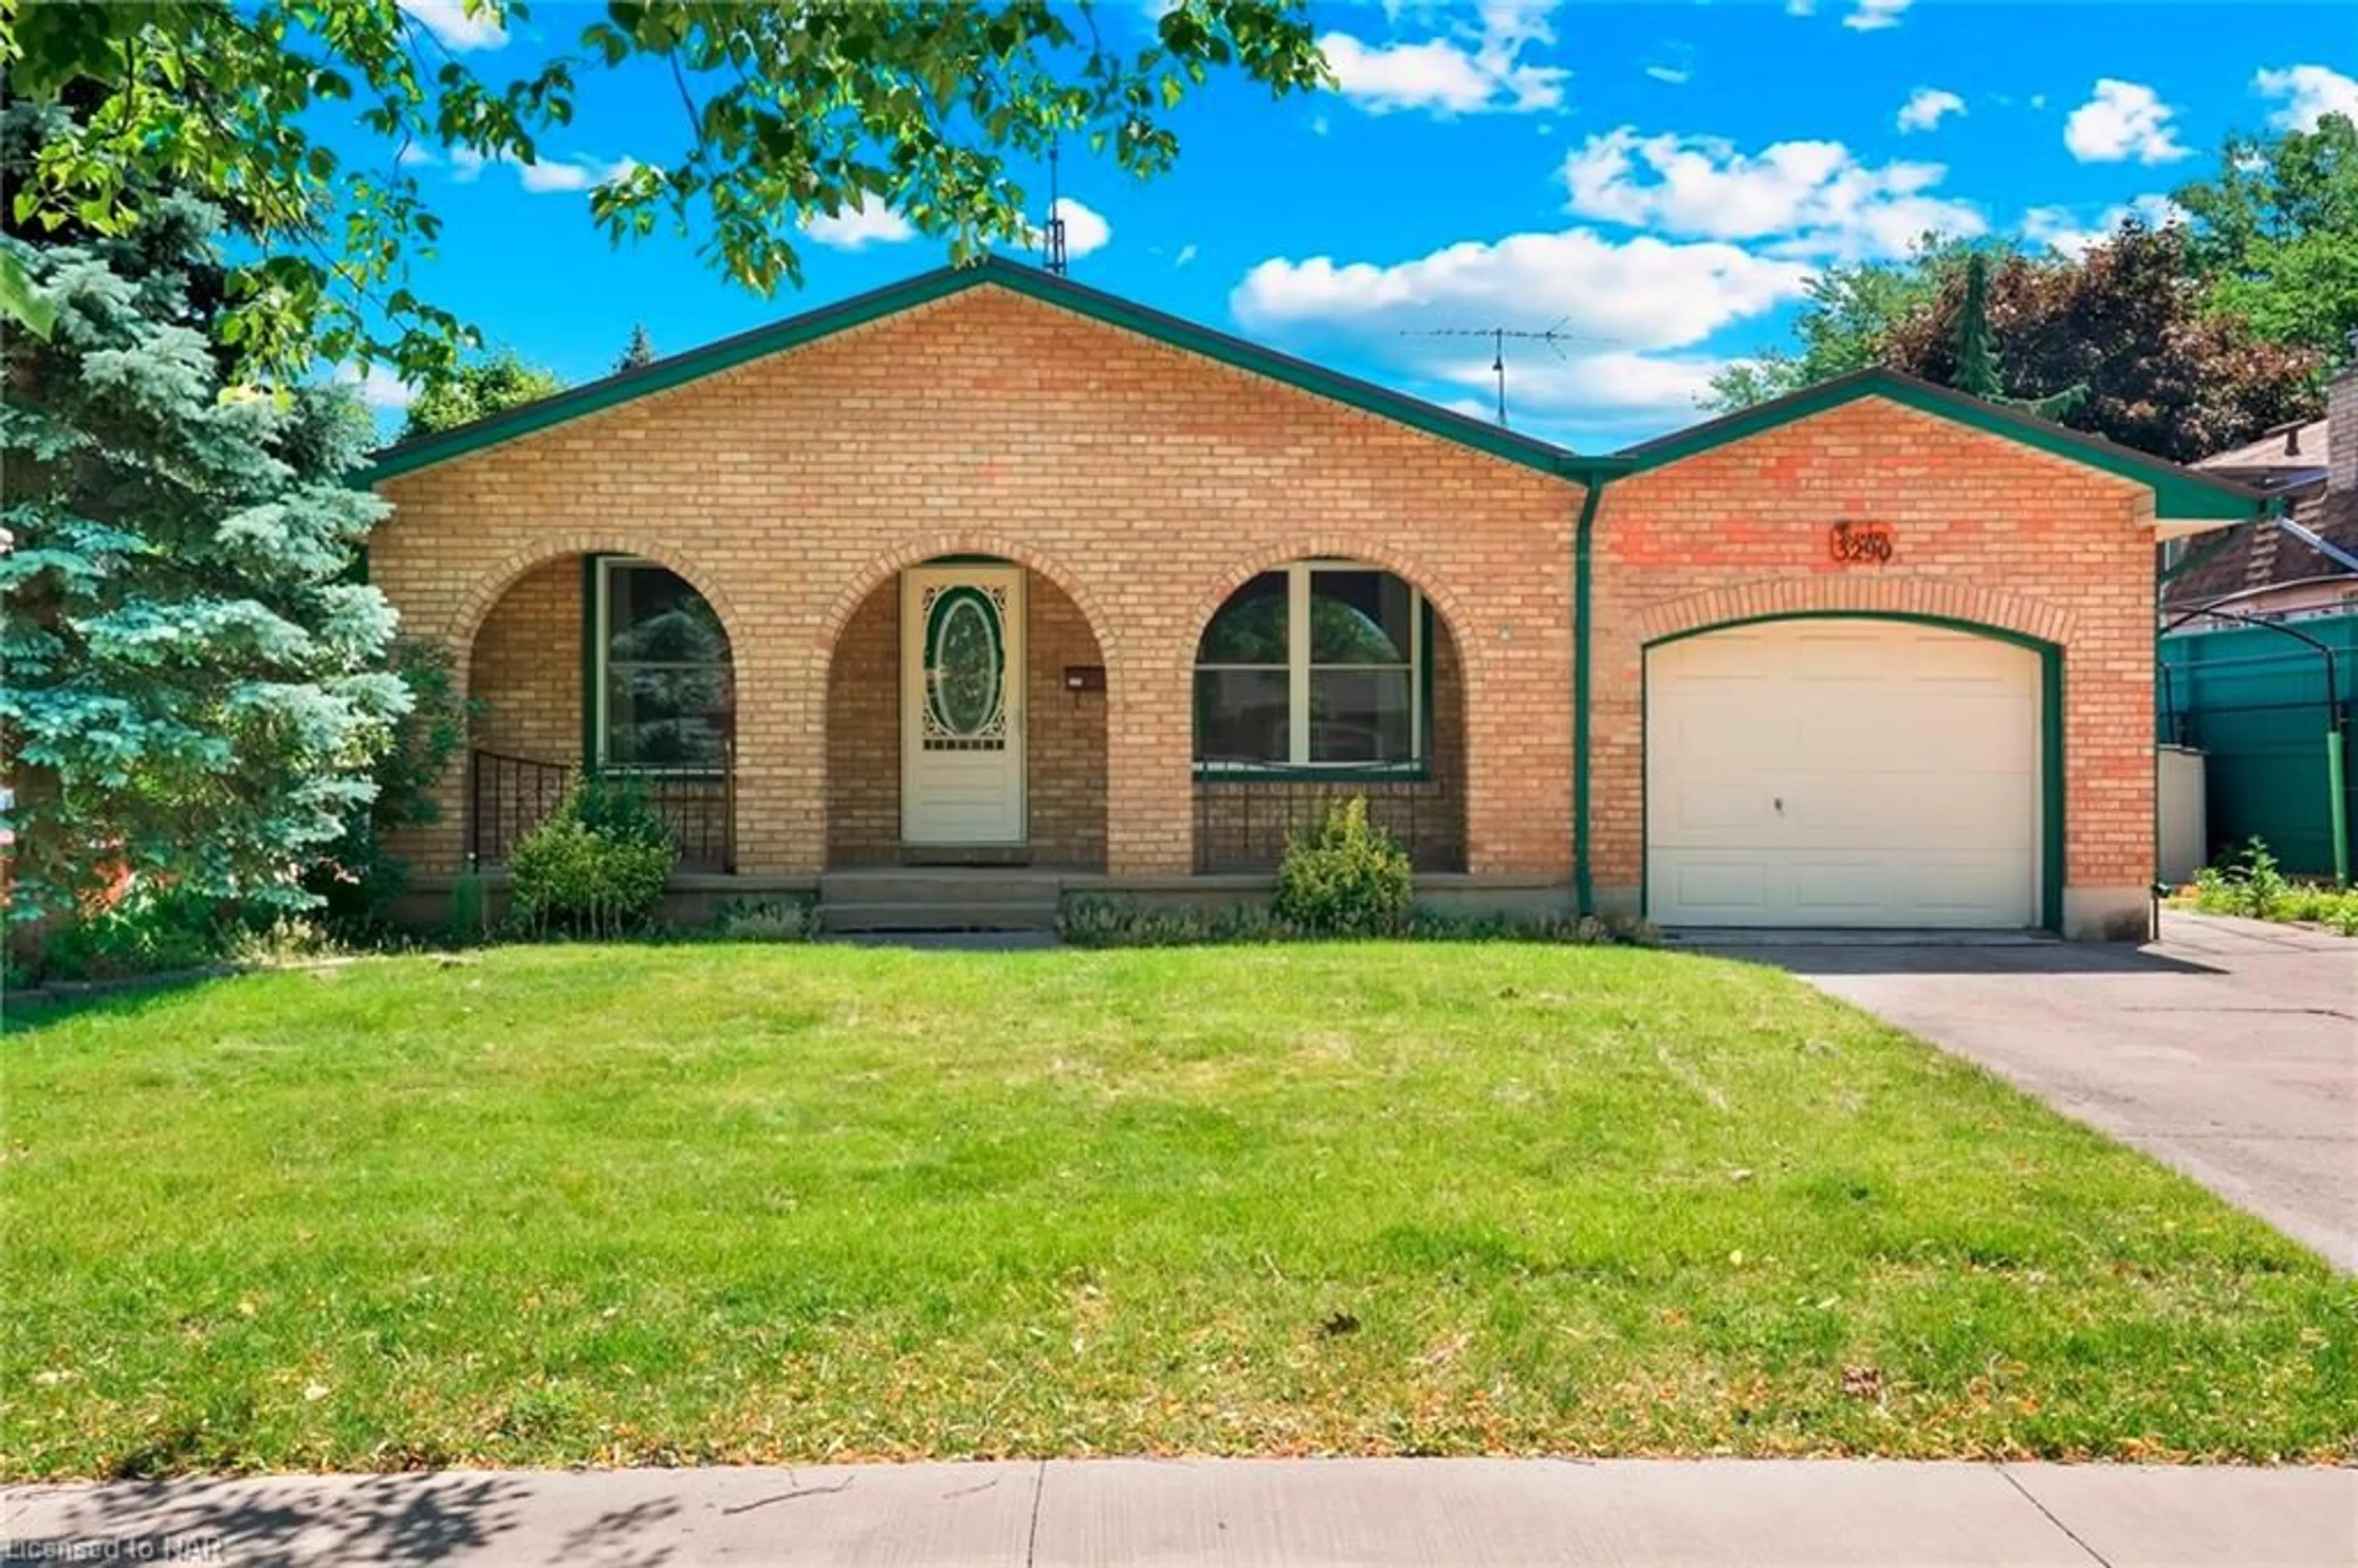 Home with brick exterior material for 3290 Fairway Rd, Niagara Falls Ontario L2J 3R6